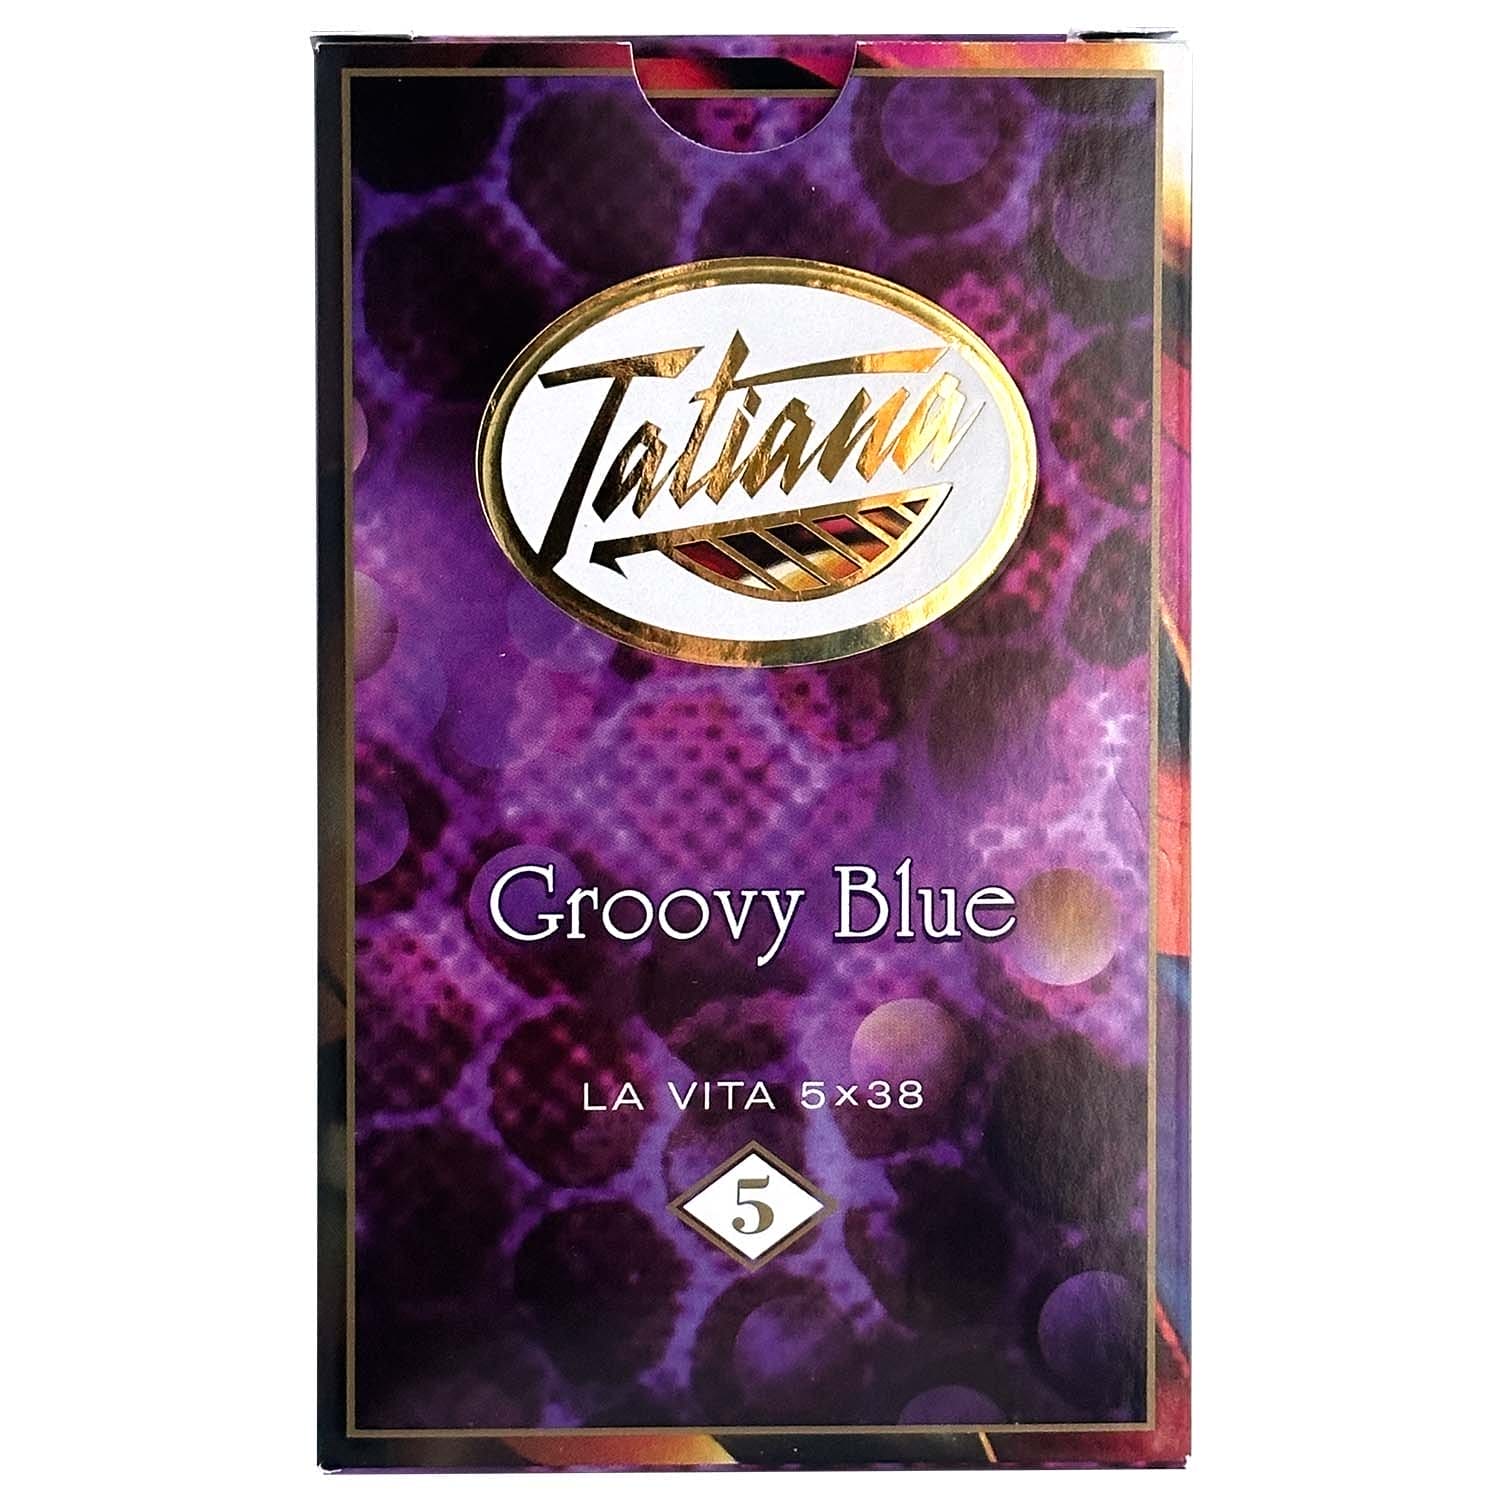 Tatiana La Vita Groovy Blue Cigars